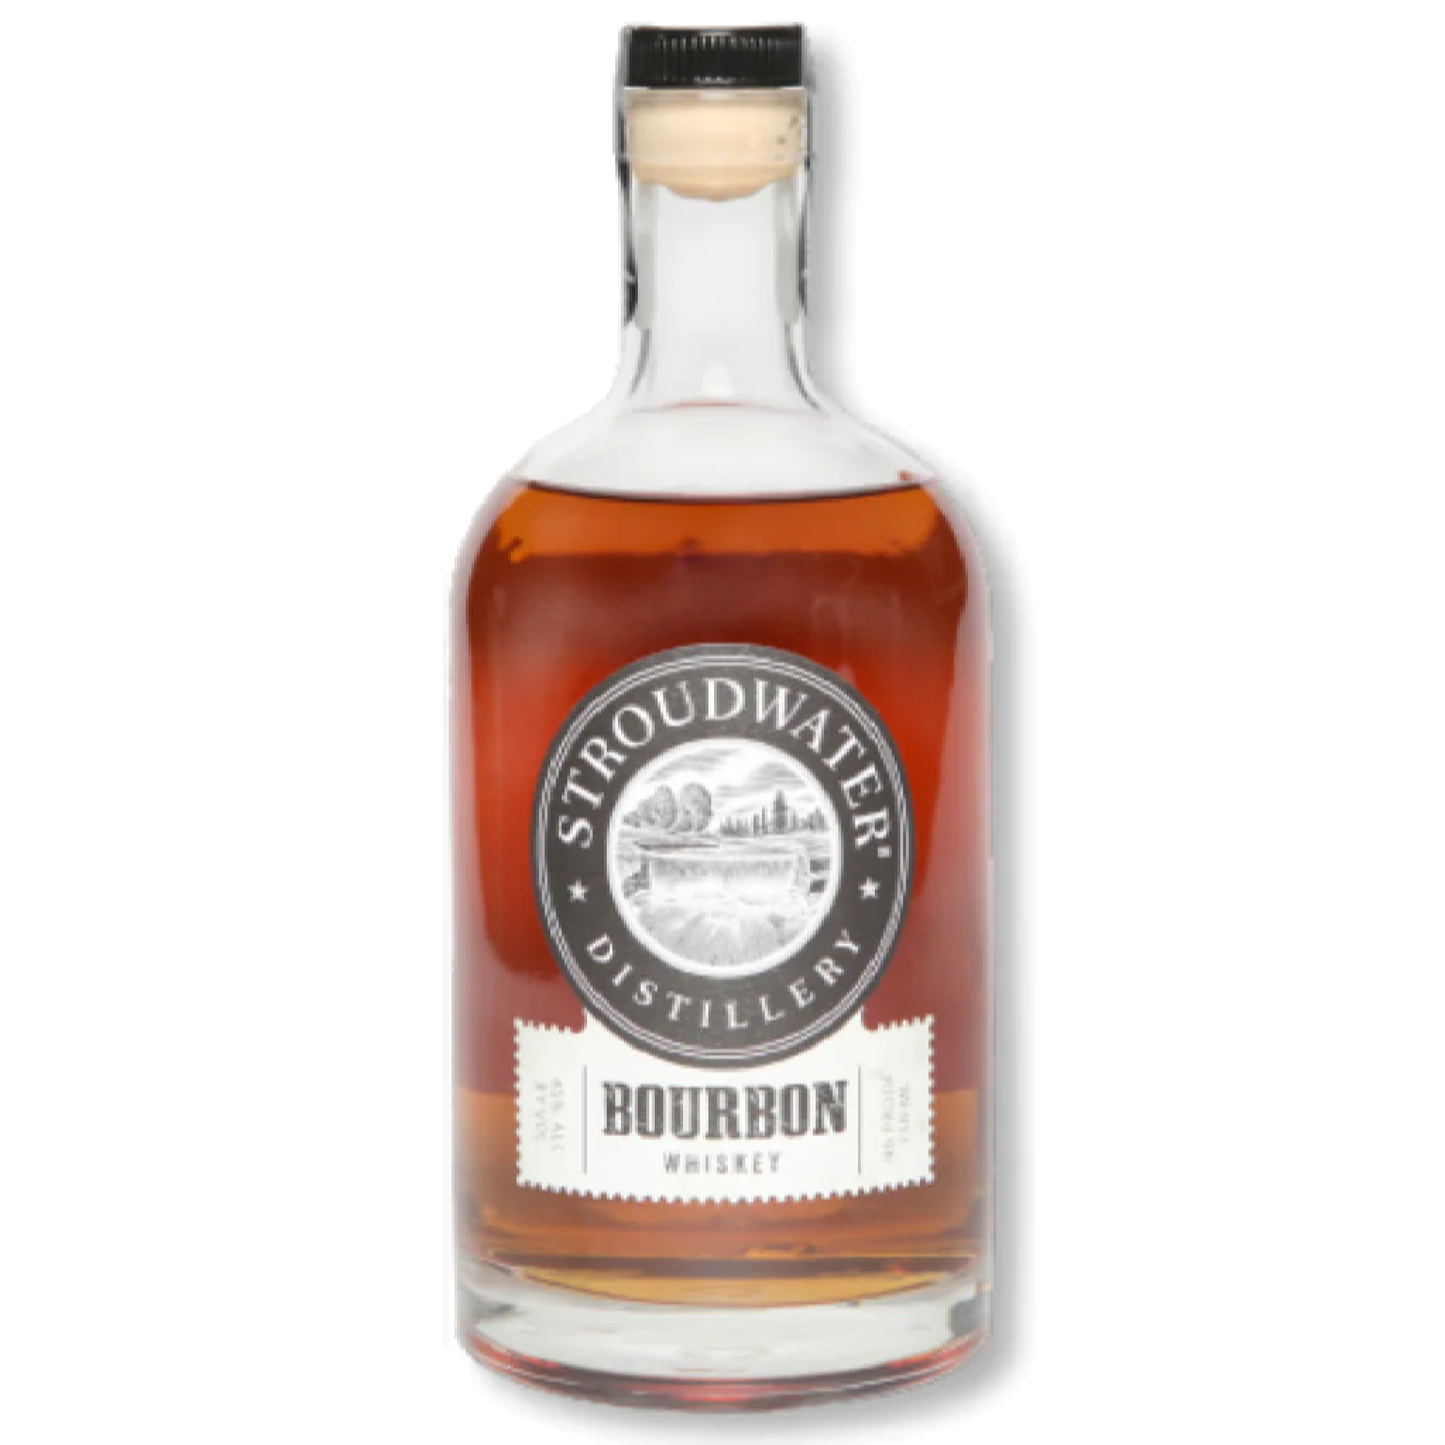 Stroudwater Bourbon - Liquor Geeks